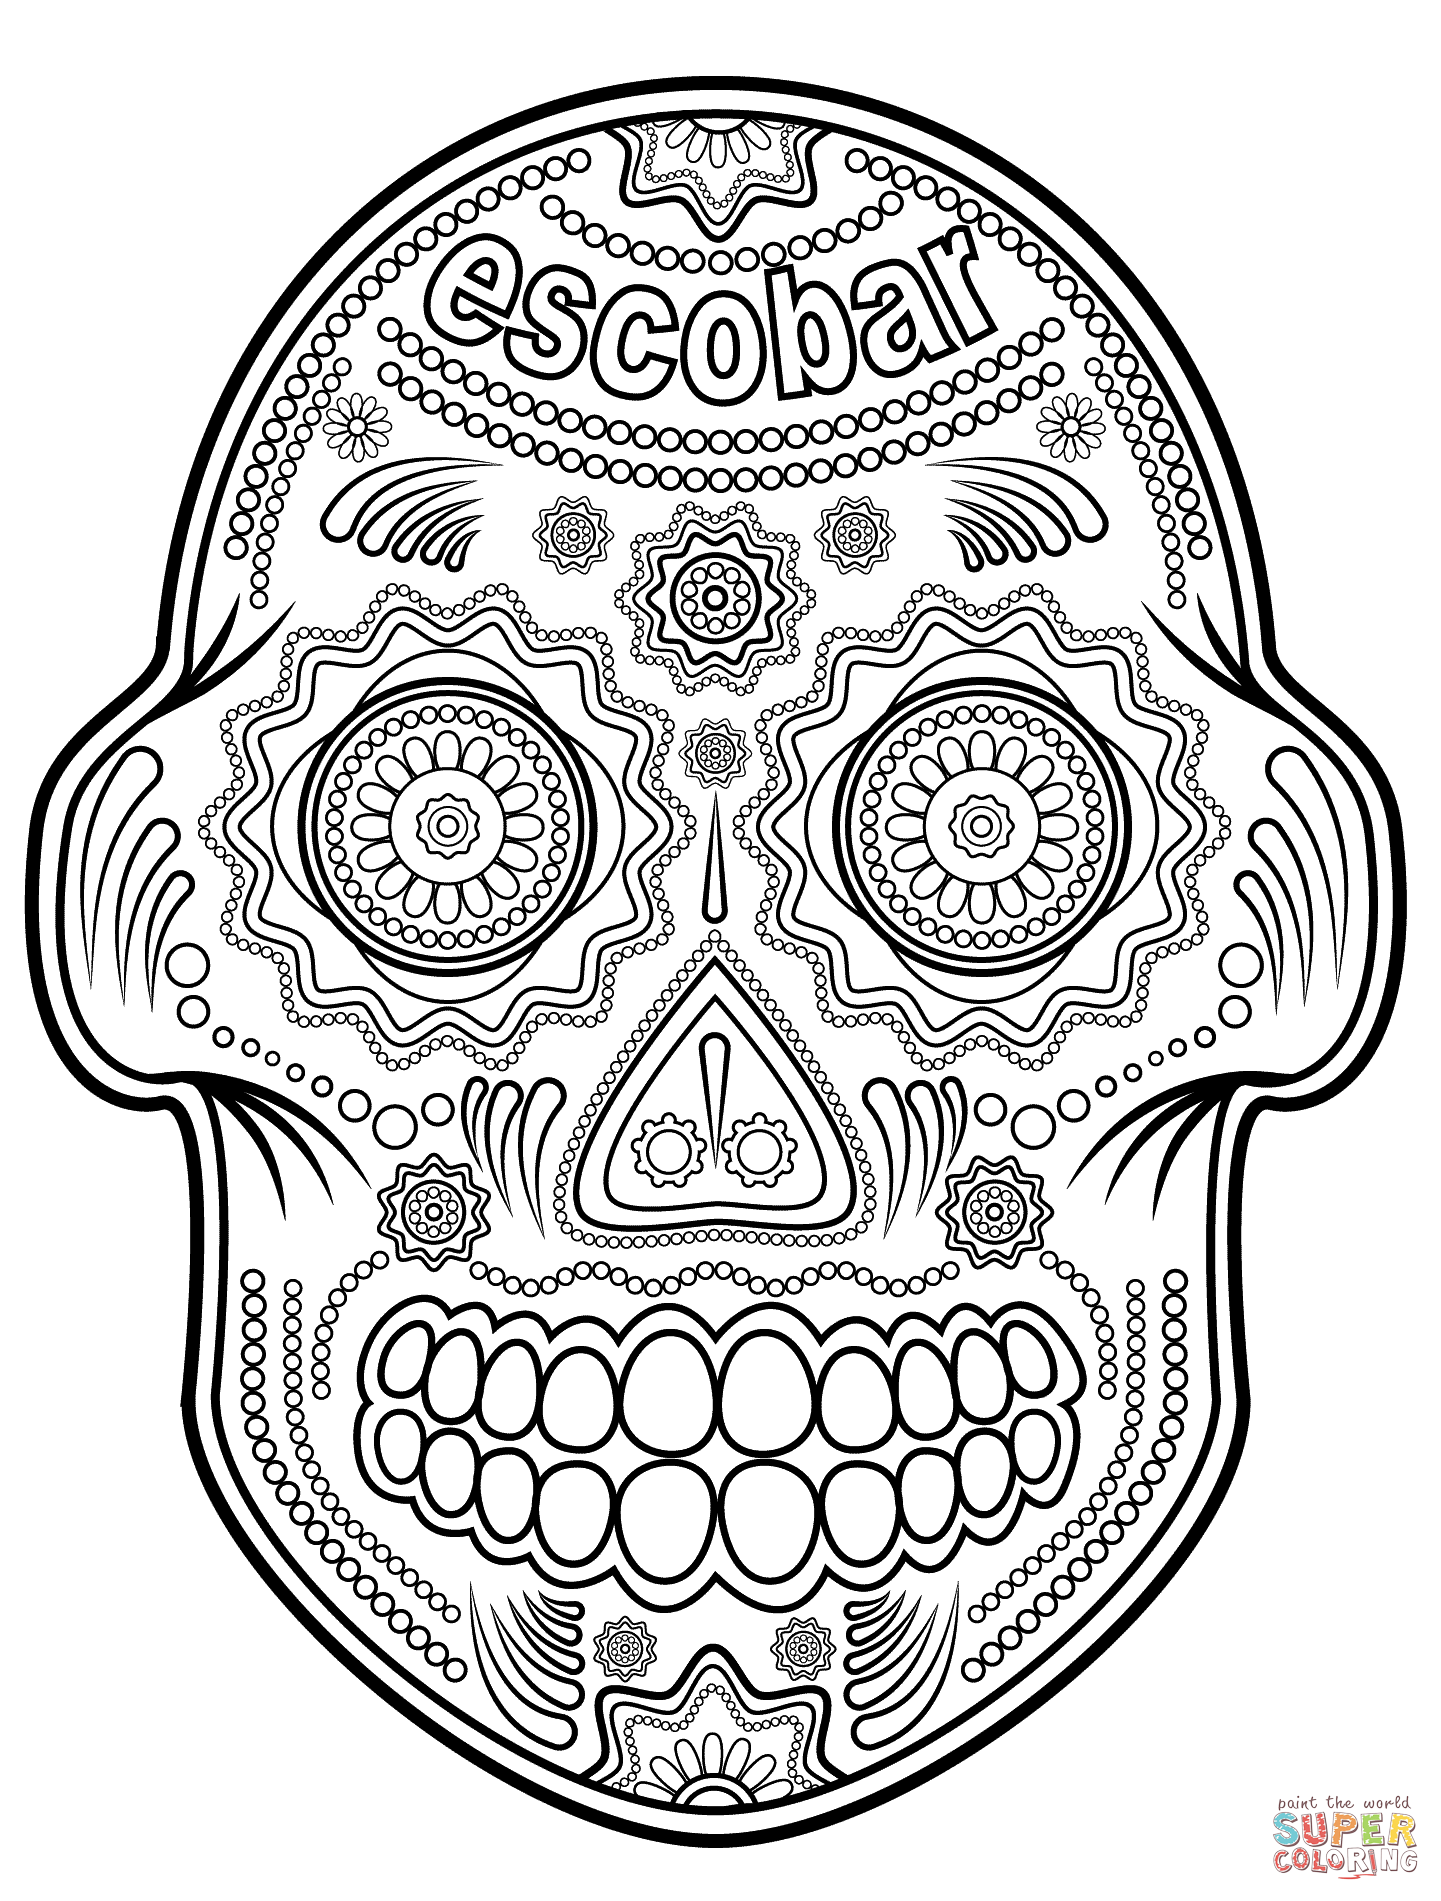 Escobar sugar skull coloring page free printable coloring pages